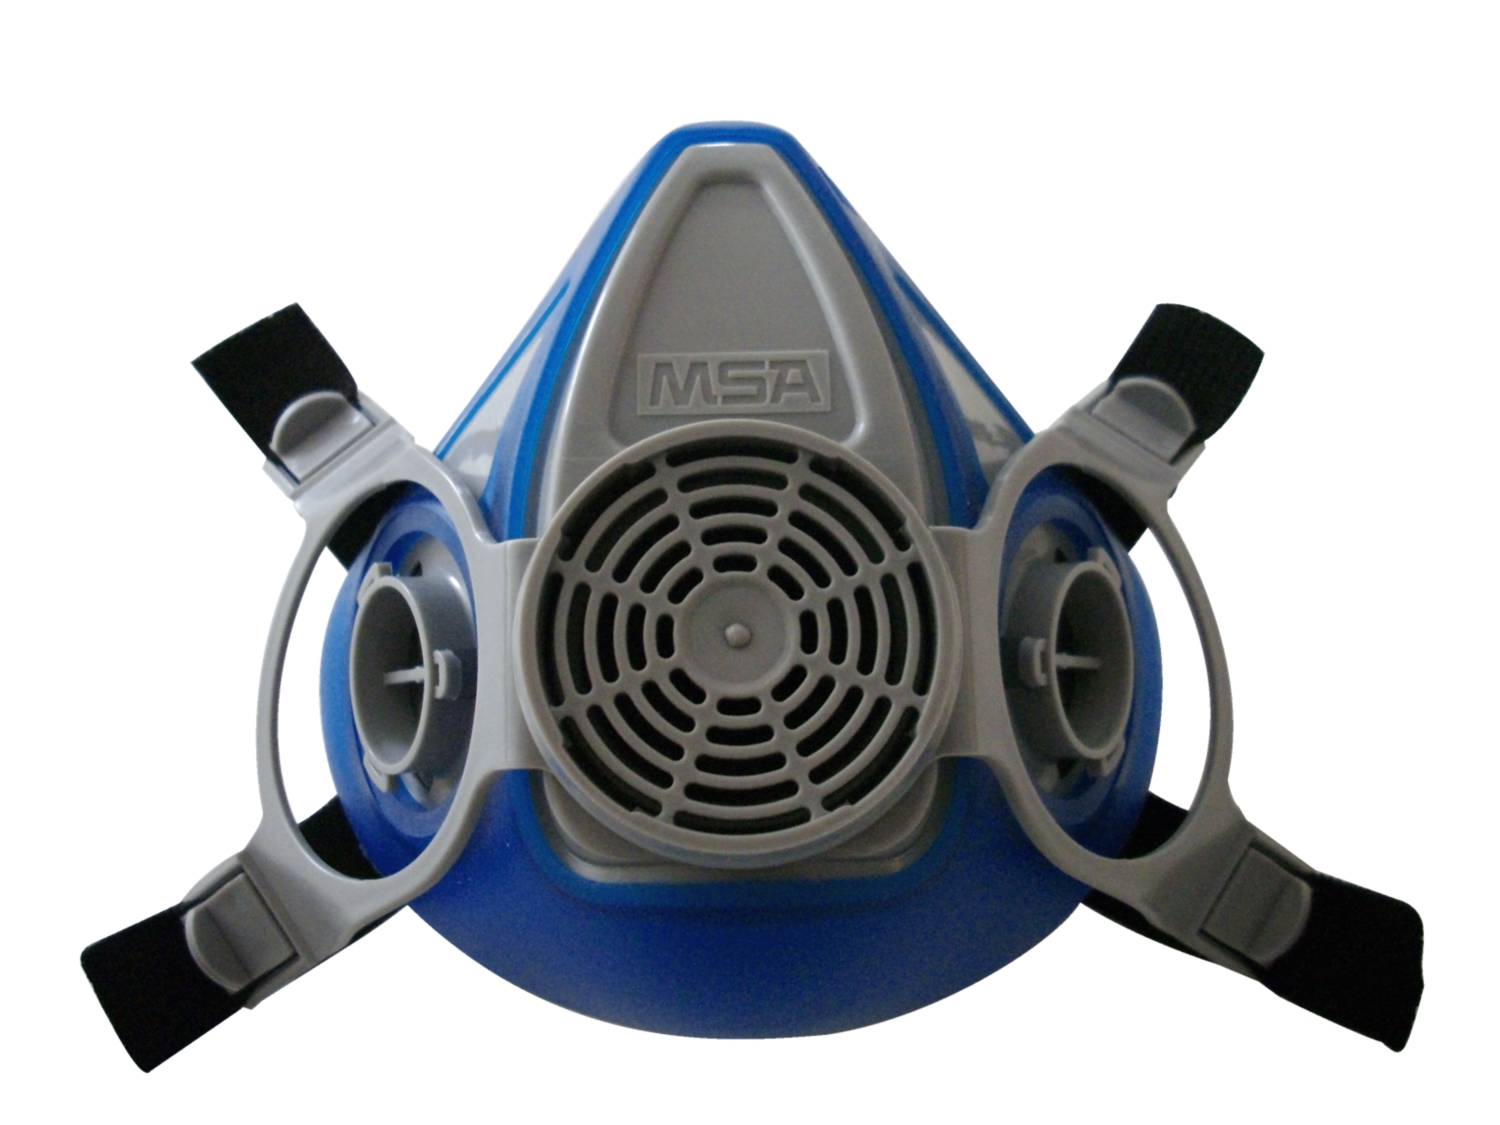 Masque jetable P2 Advantage 200LS MSA Safety